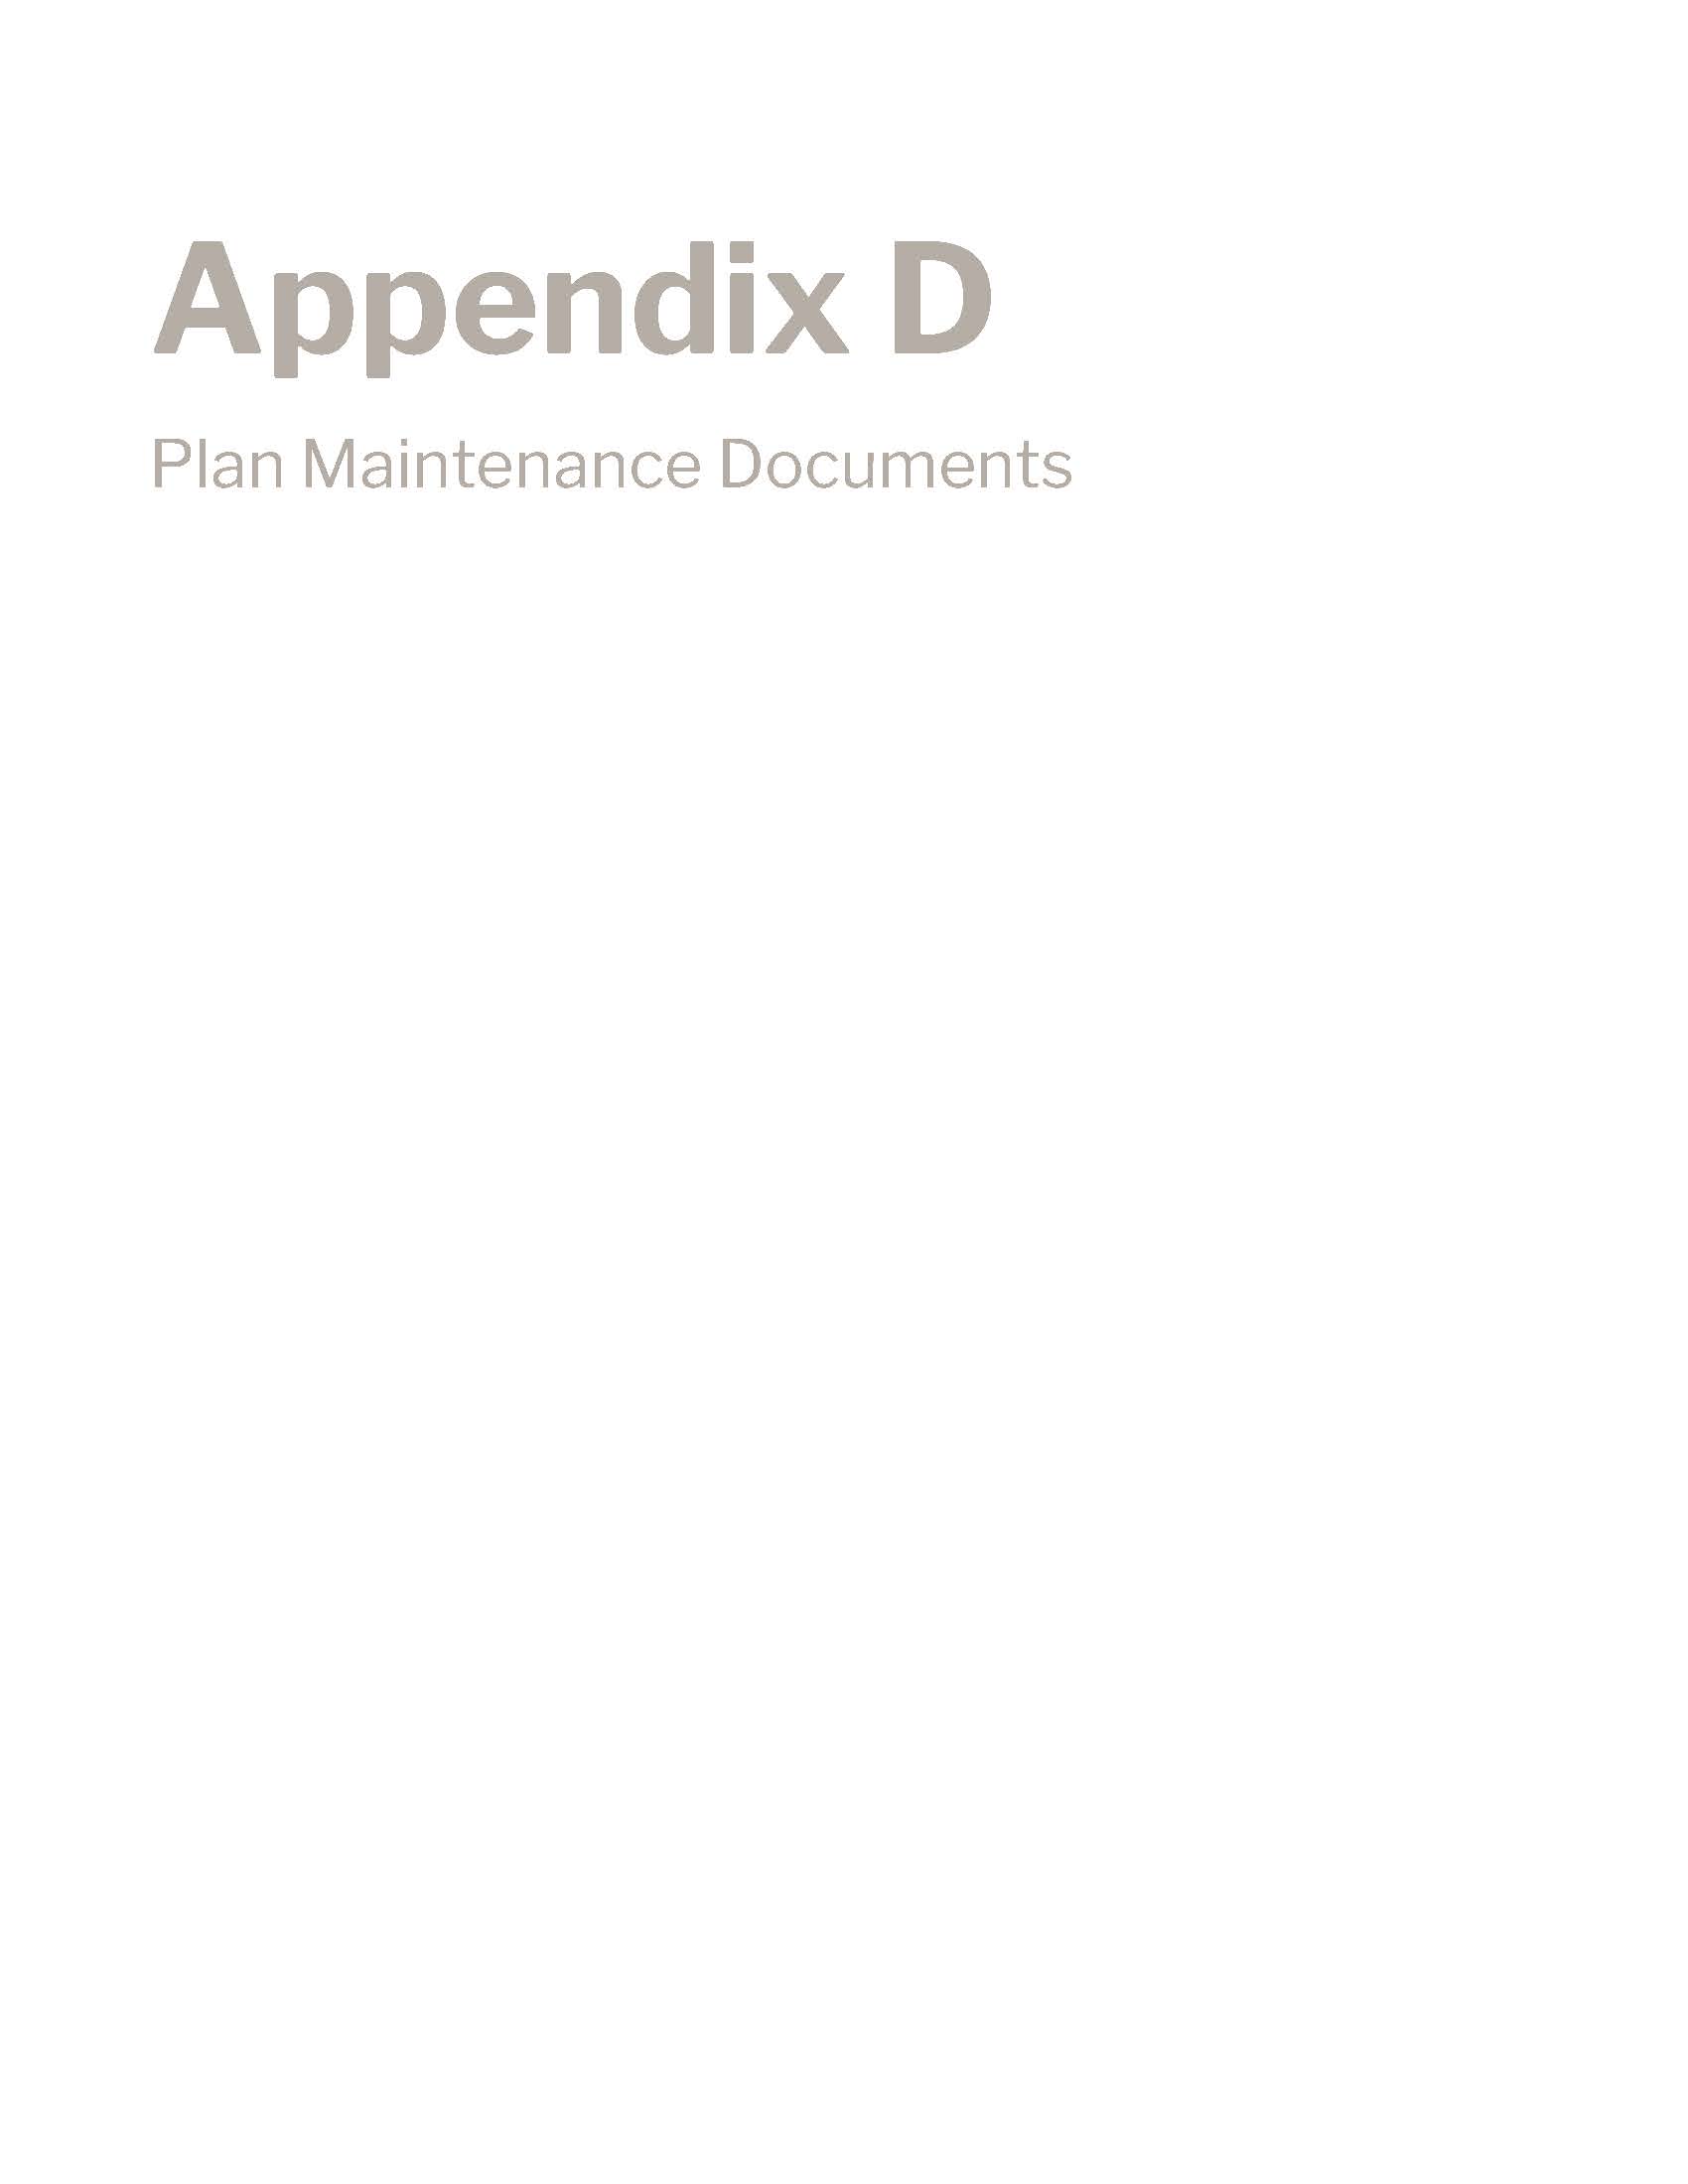 HCR Appendix D